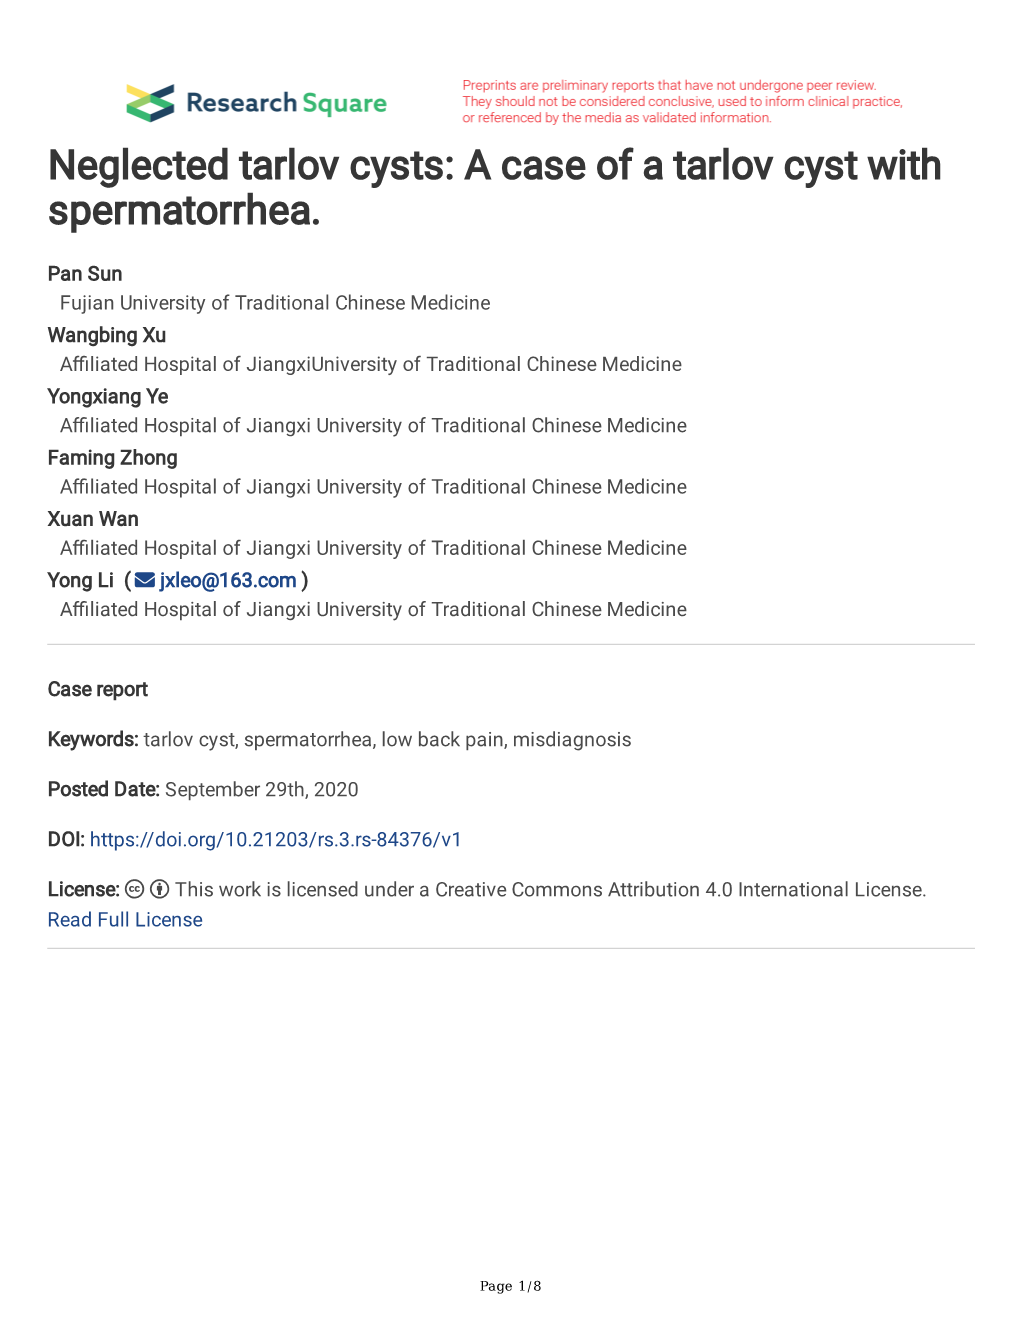 A Case of a Tarlov Cyst with Spermatorrhea